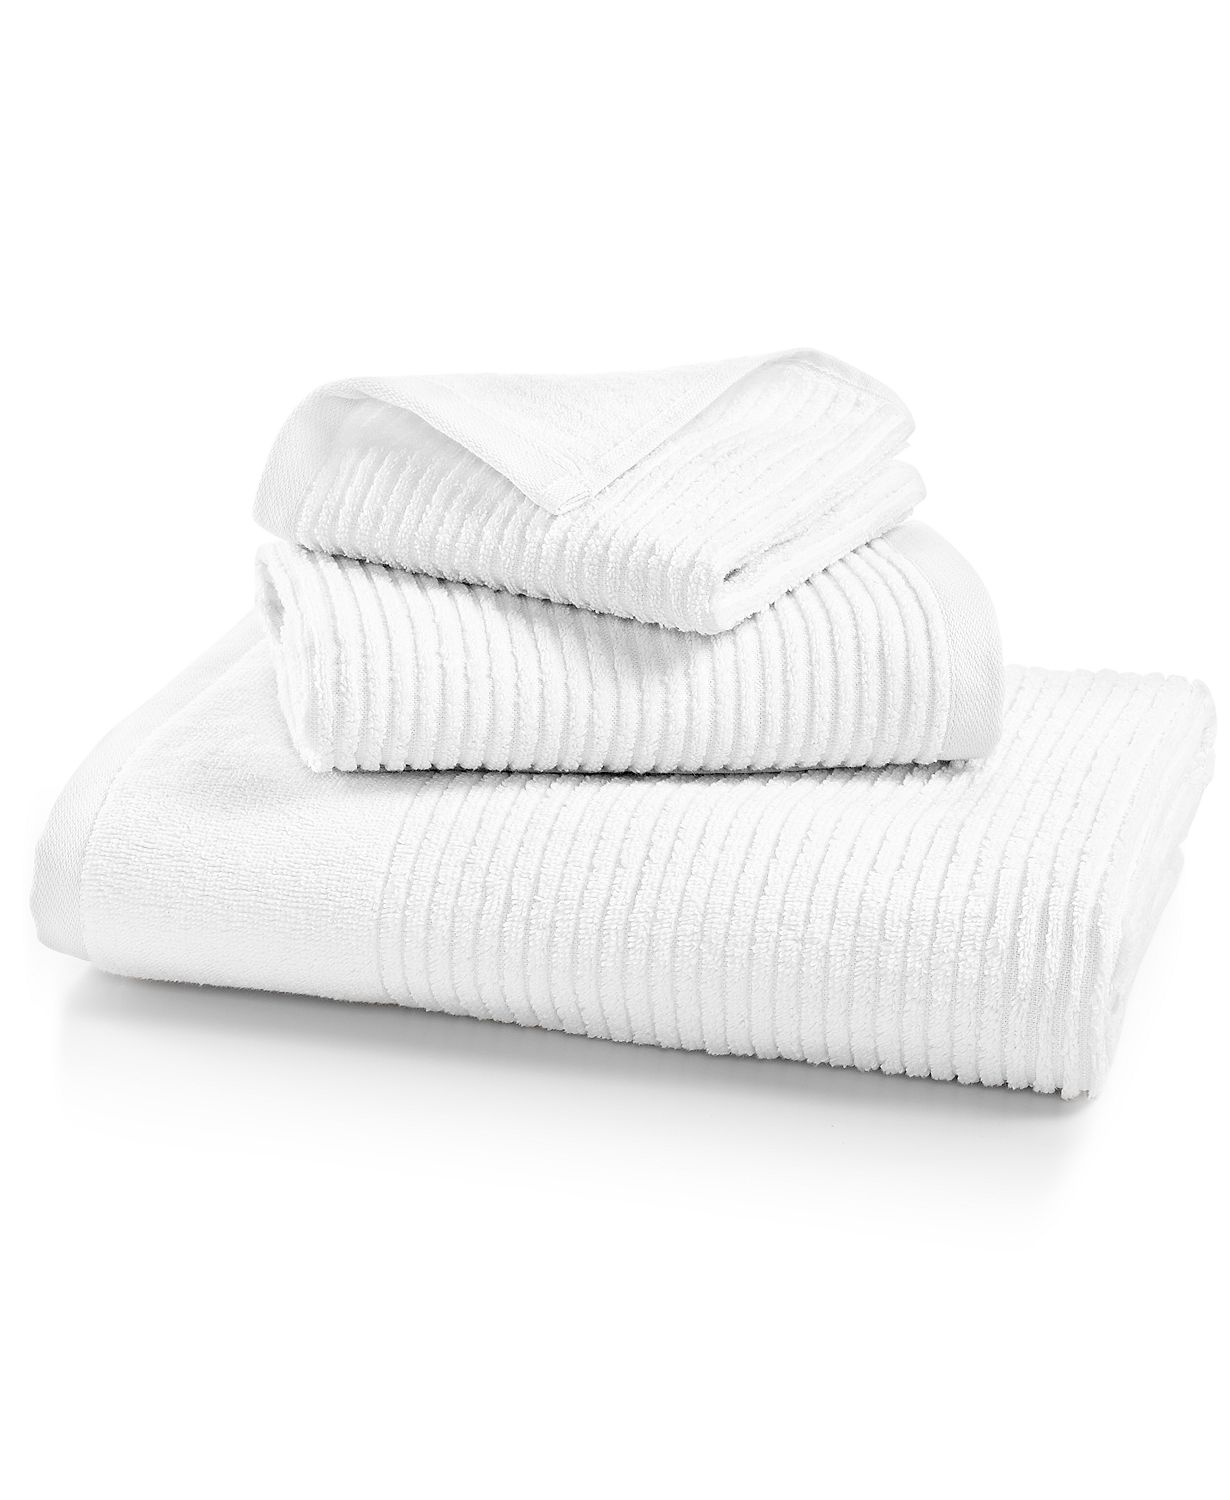 White ribbed bath towels from Martha Stewart